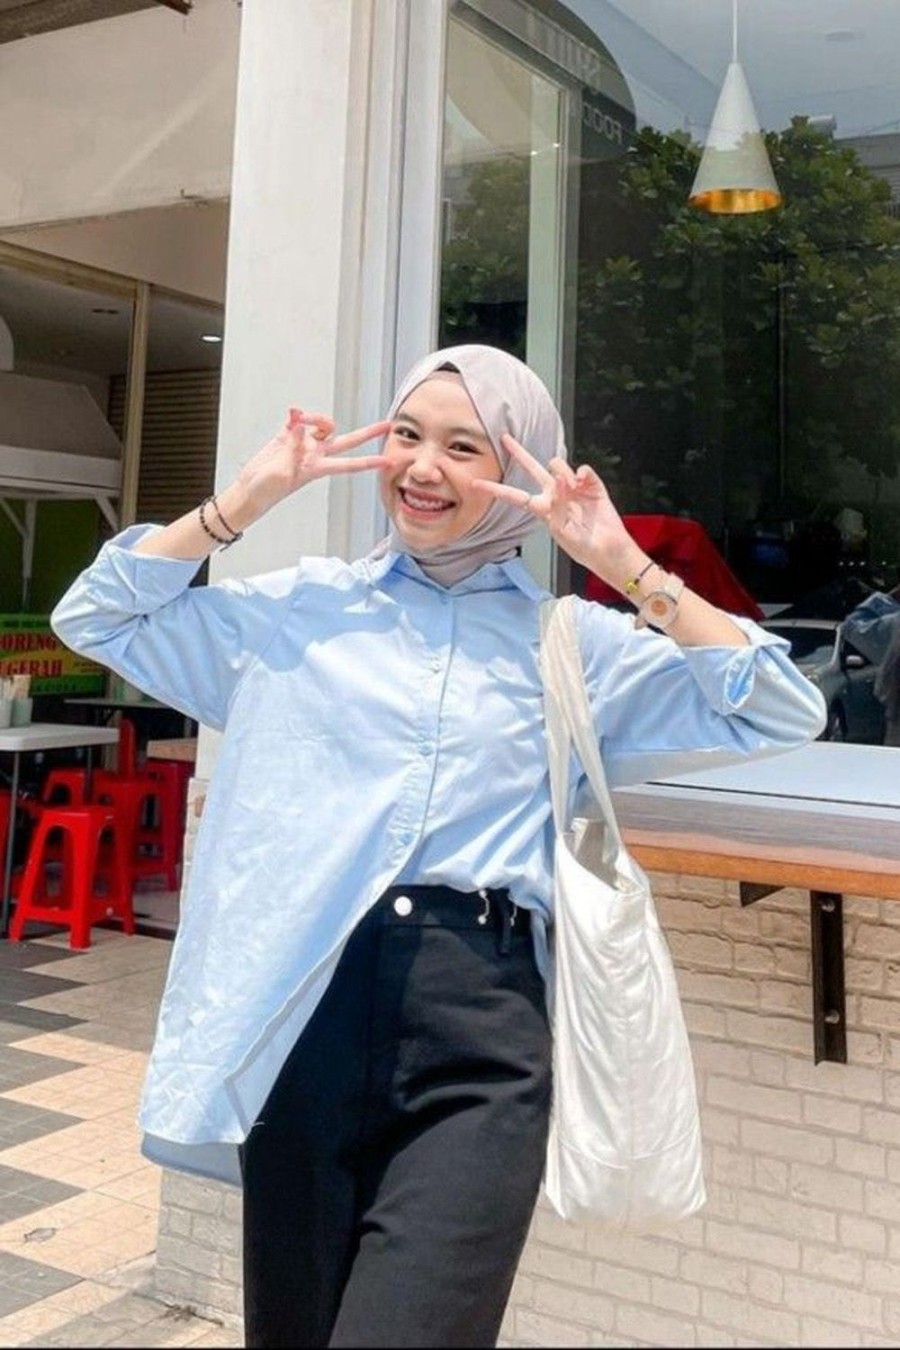 Ootd Hijab Baju Warna Biru Muda  Wanita, Casual hijab outfit